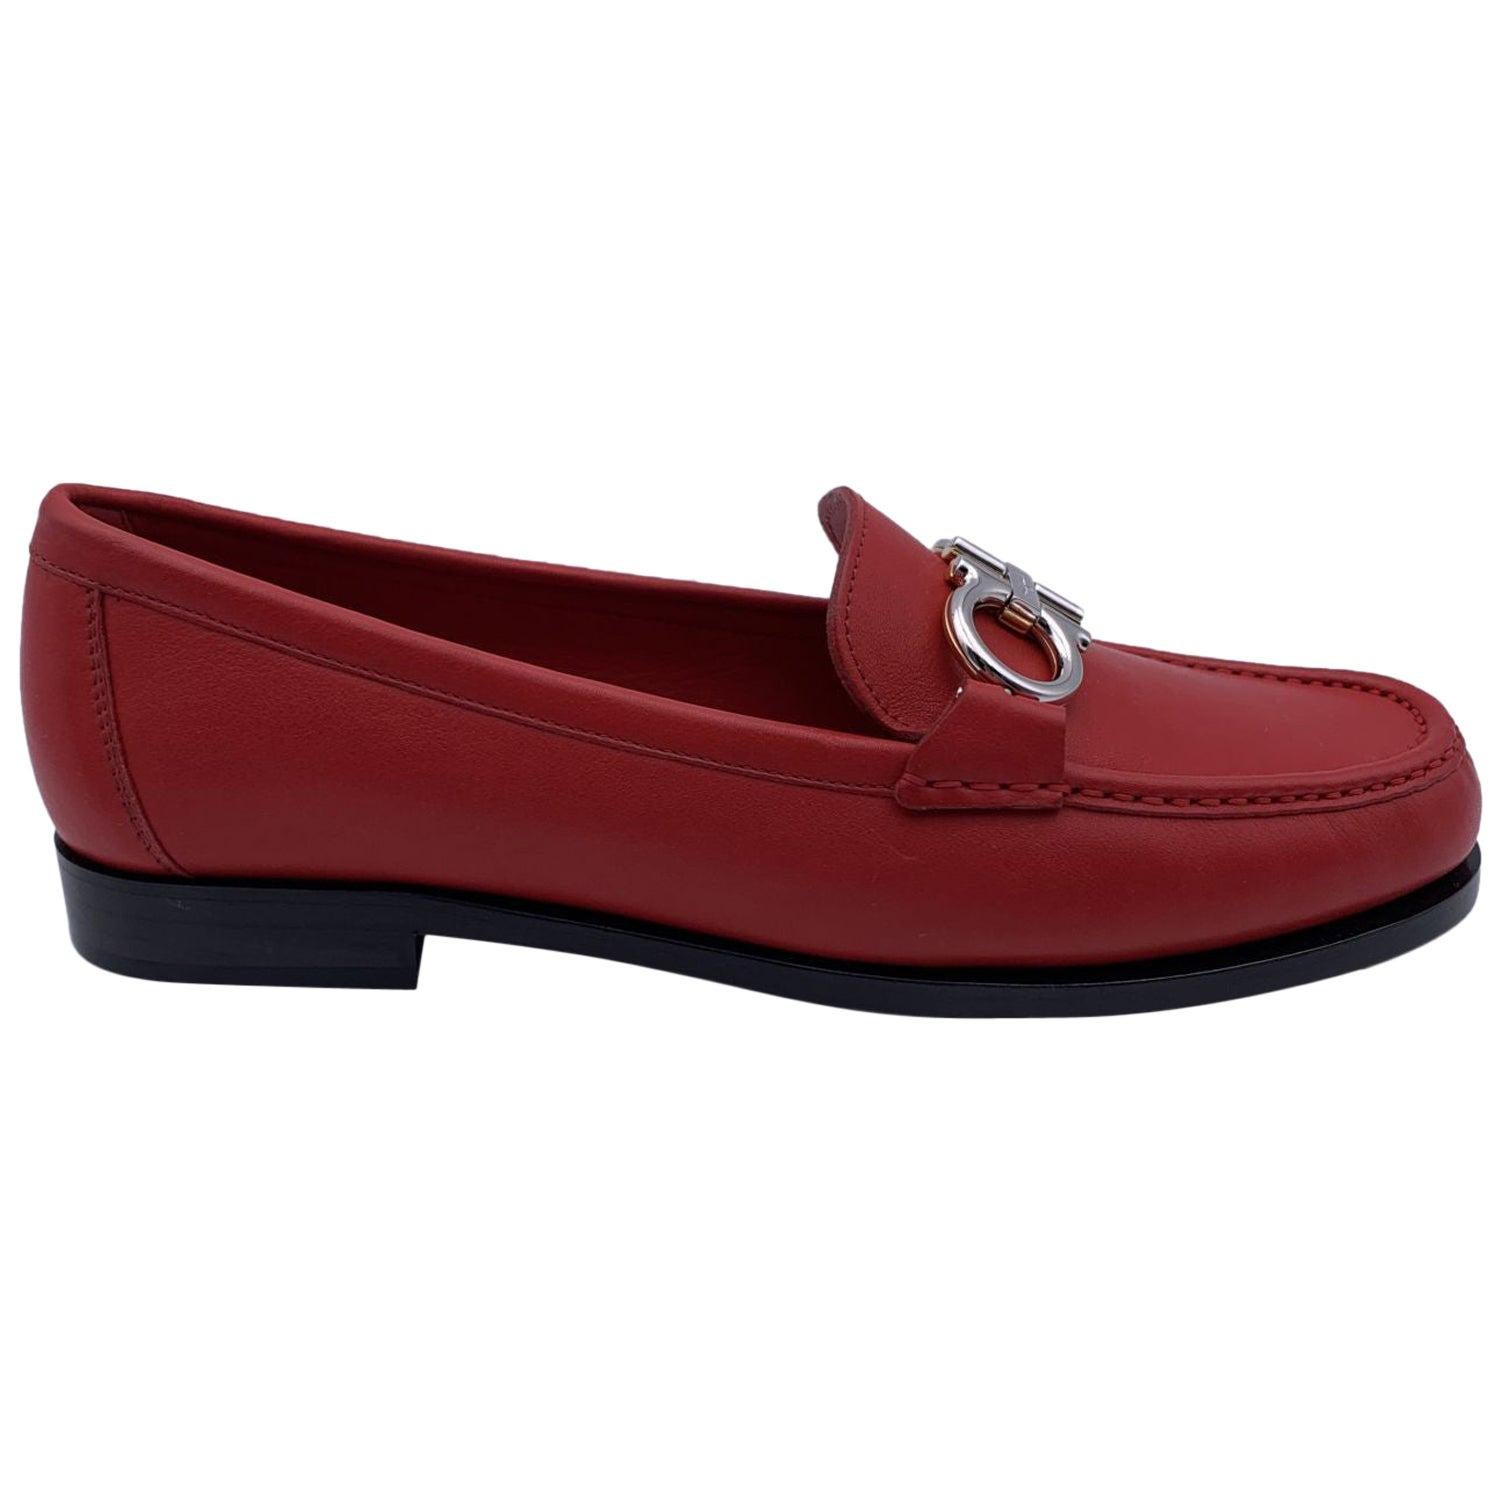 Salvatore Ferragamo Leather Rolo Loafers Moccassins Size 6.5C 37C